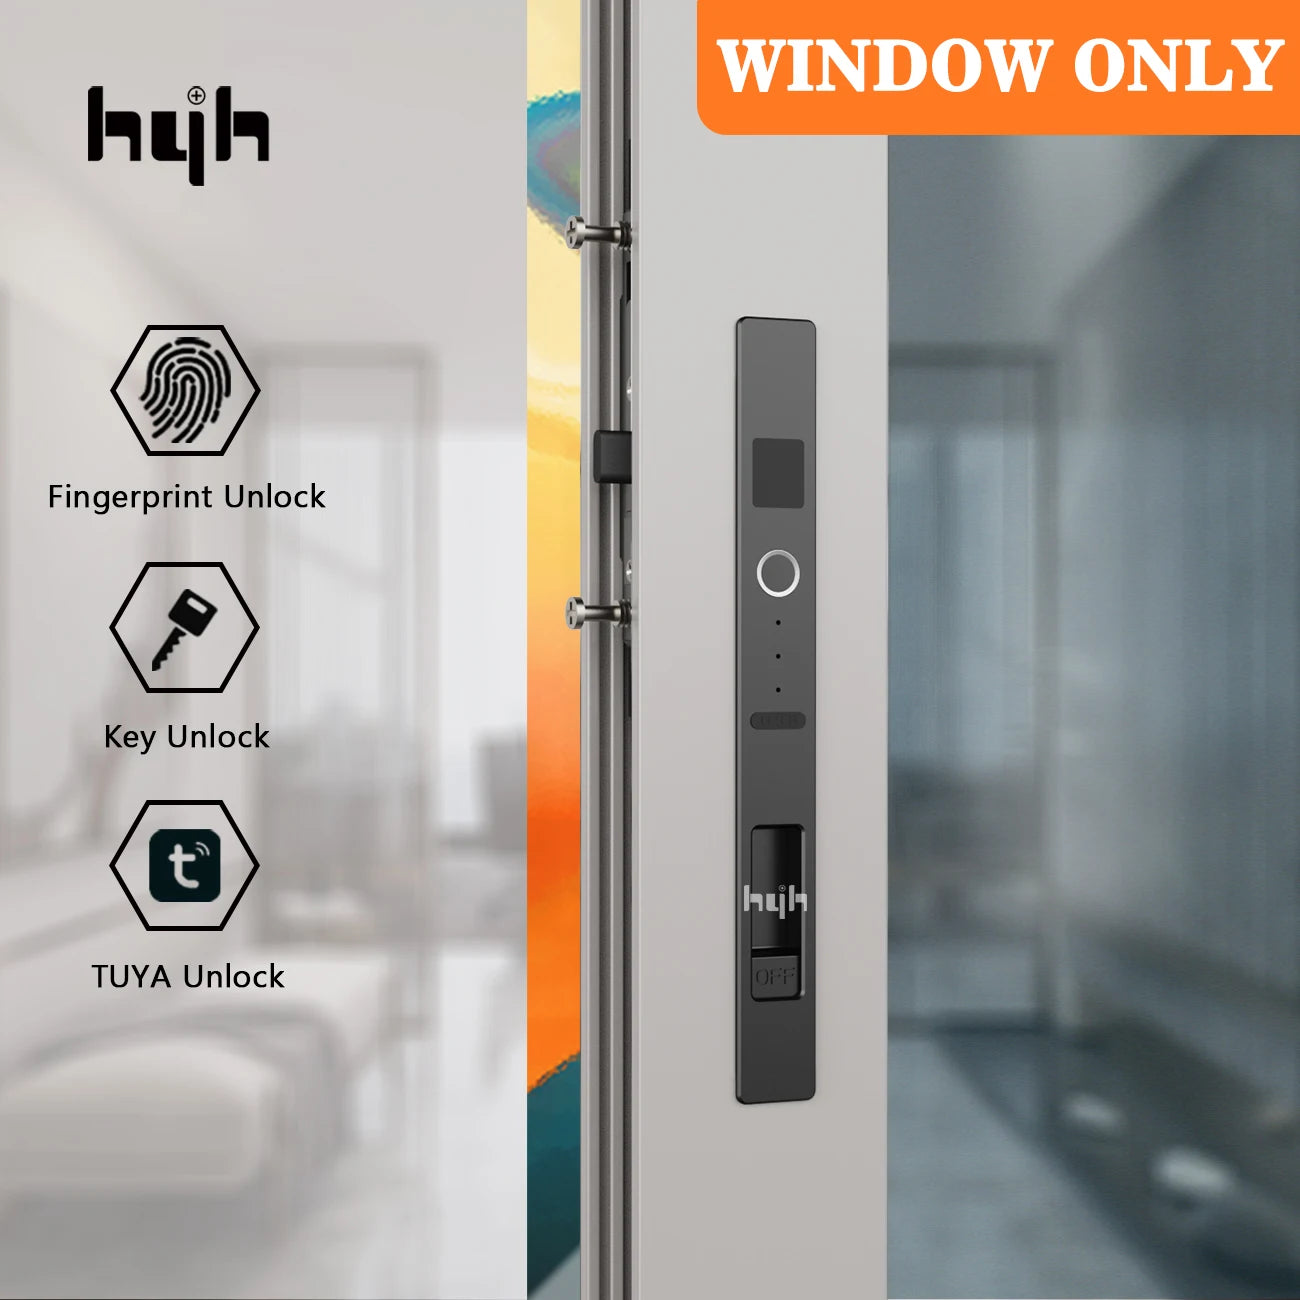 hyh Smart Lock for Sliding Window Fingerprint Lock with Tuya Remote Control Bluetooth Window Lock Security Protection